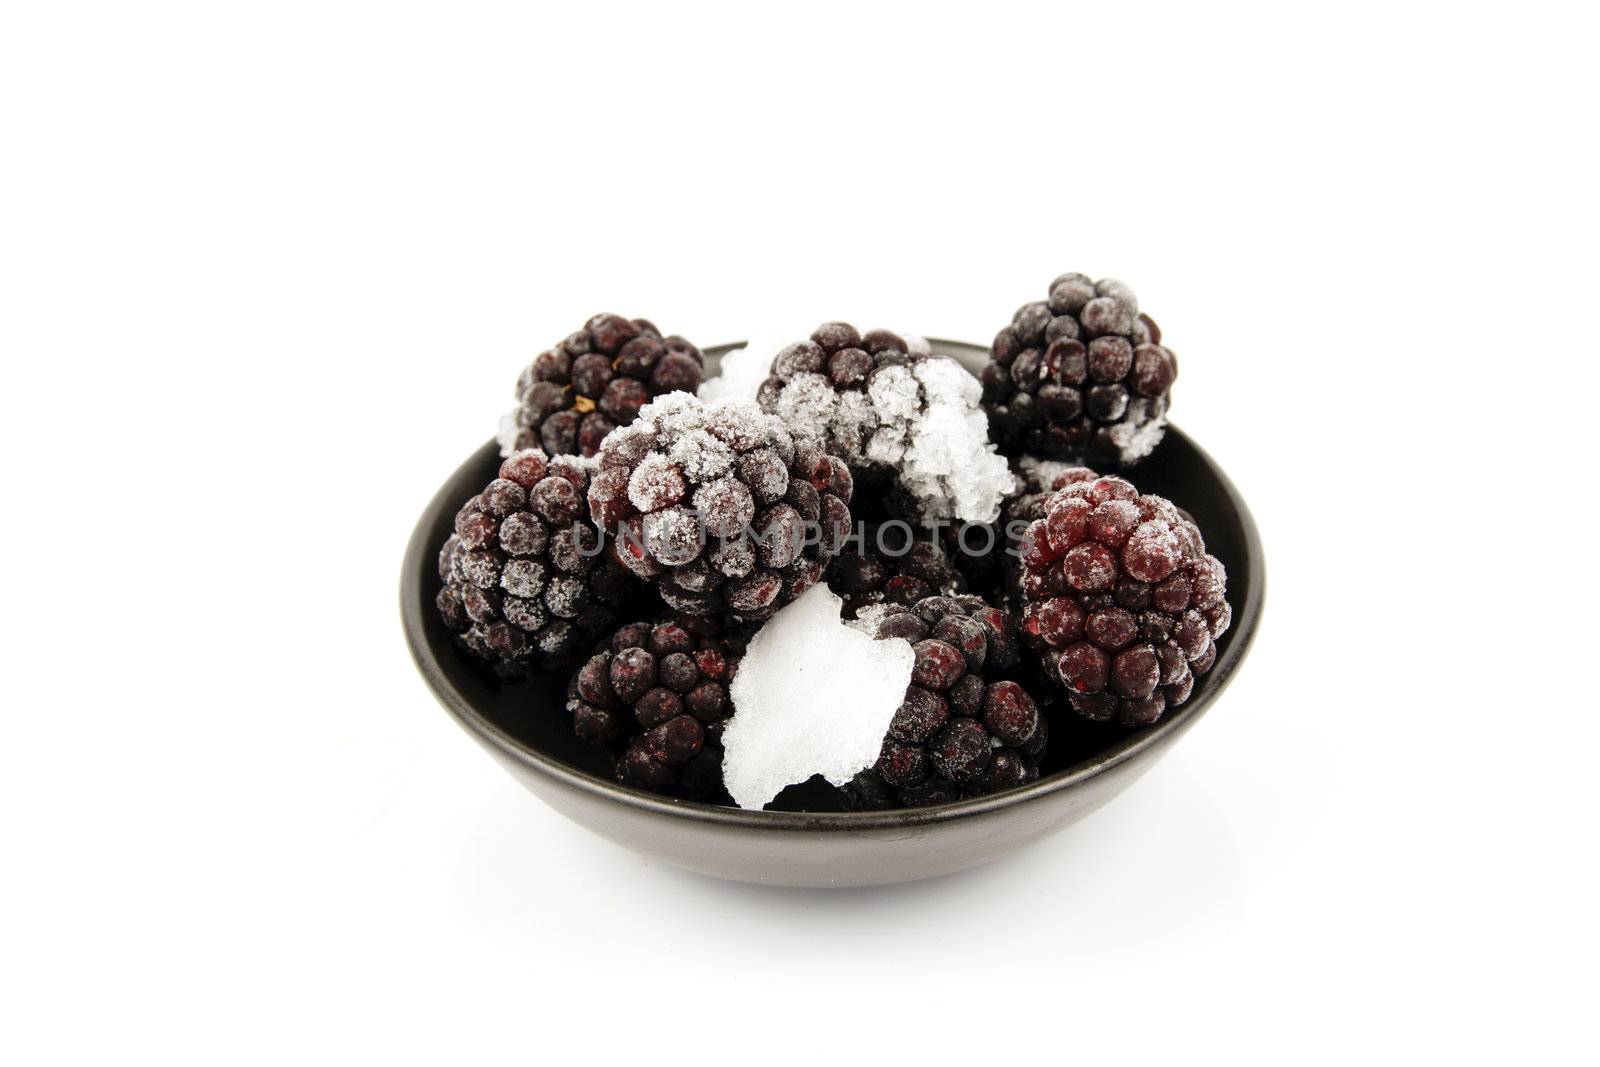 Frozen Blackberries in a Bowl by KeithWilson